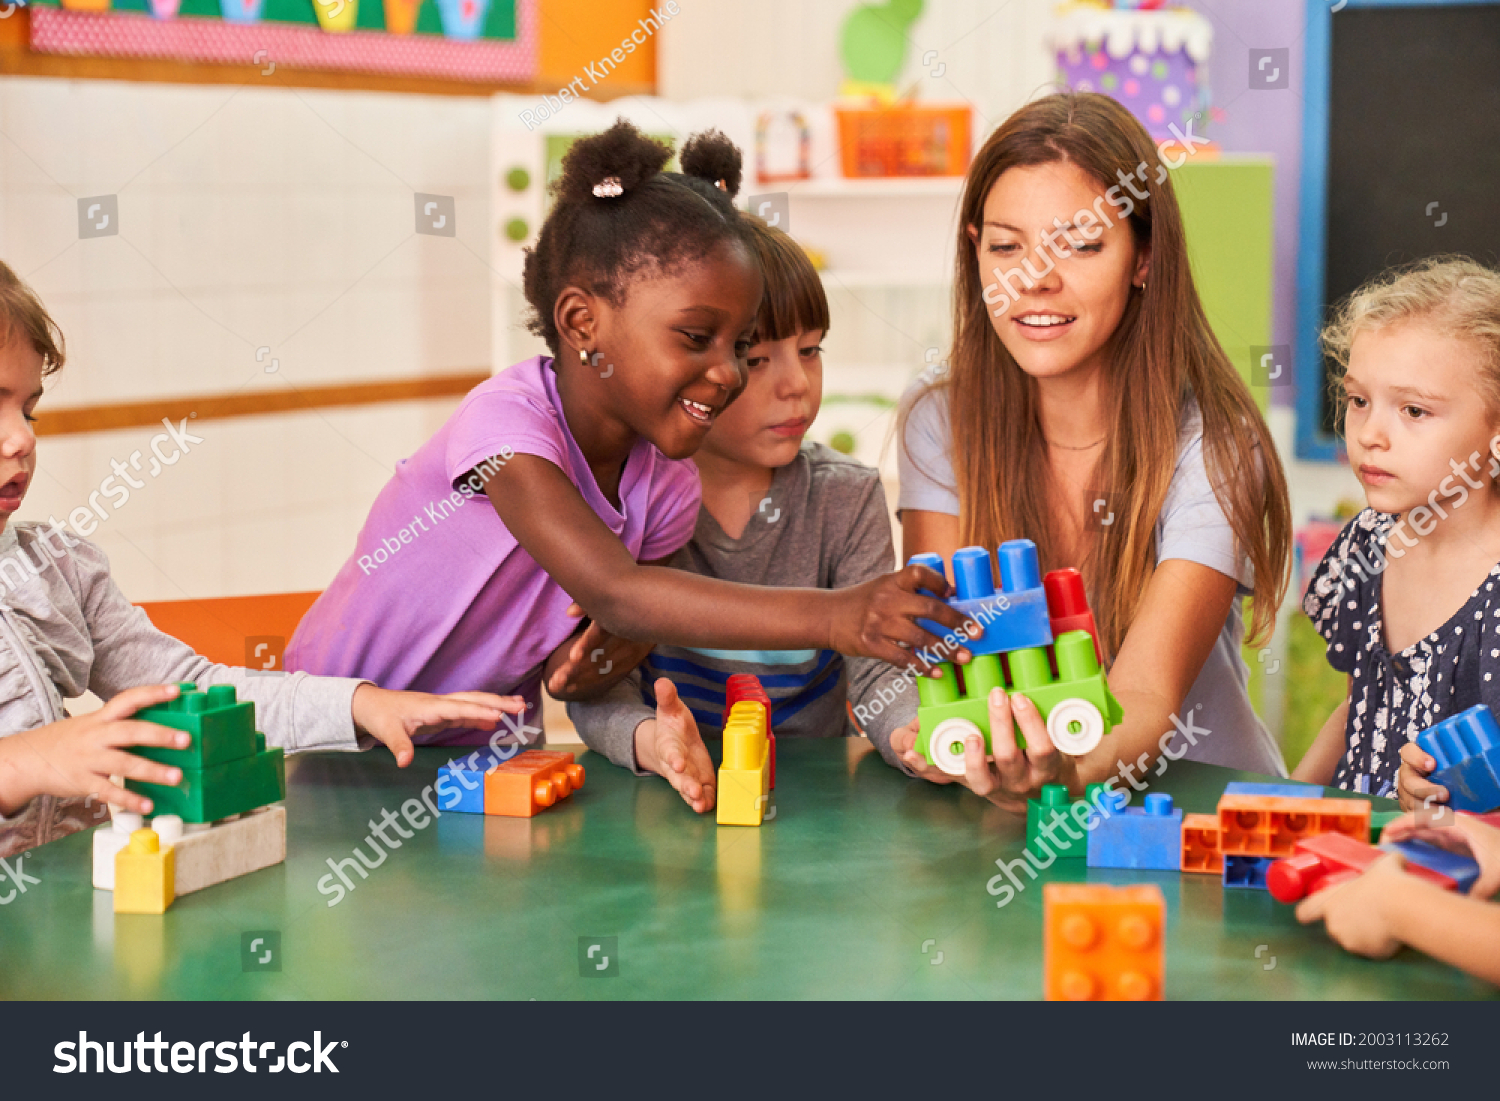 Children play together with building blocks in the international kindergarten with a kindergarten teacher #2003113262